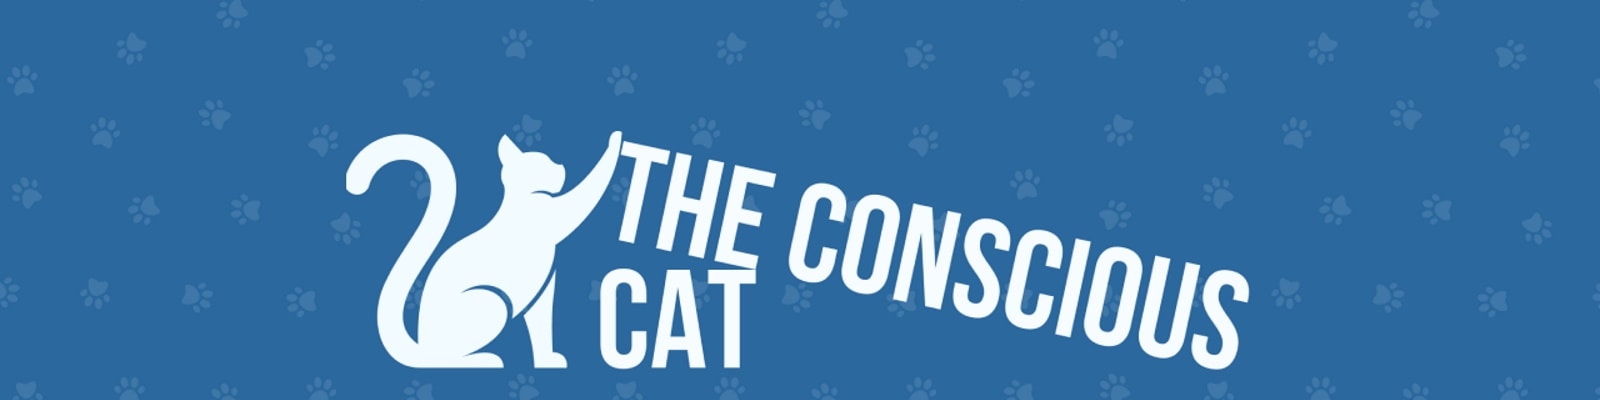 The Conscious Cat Blog